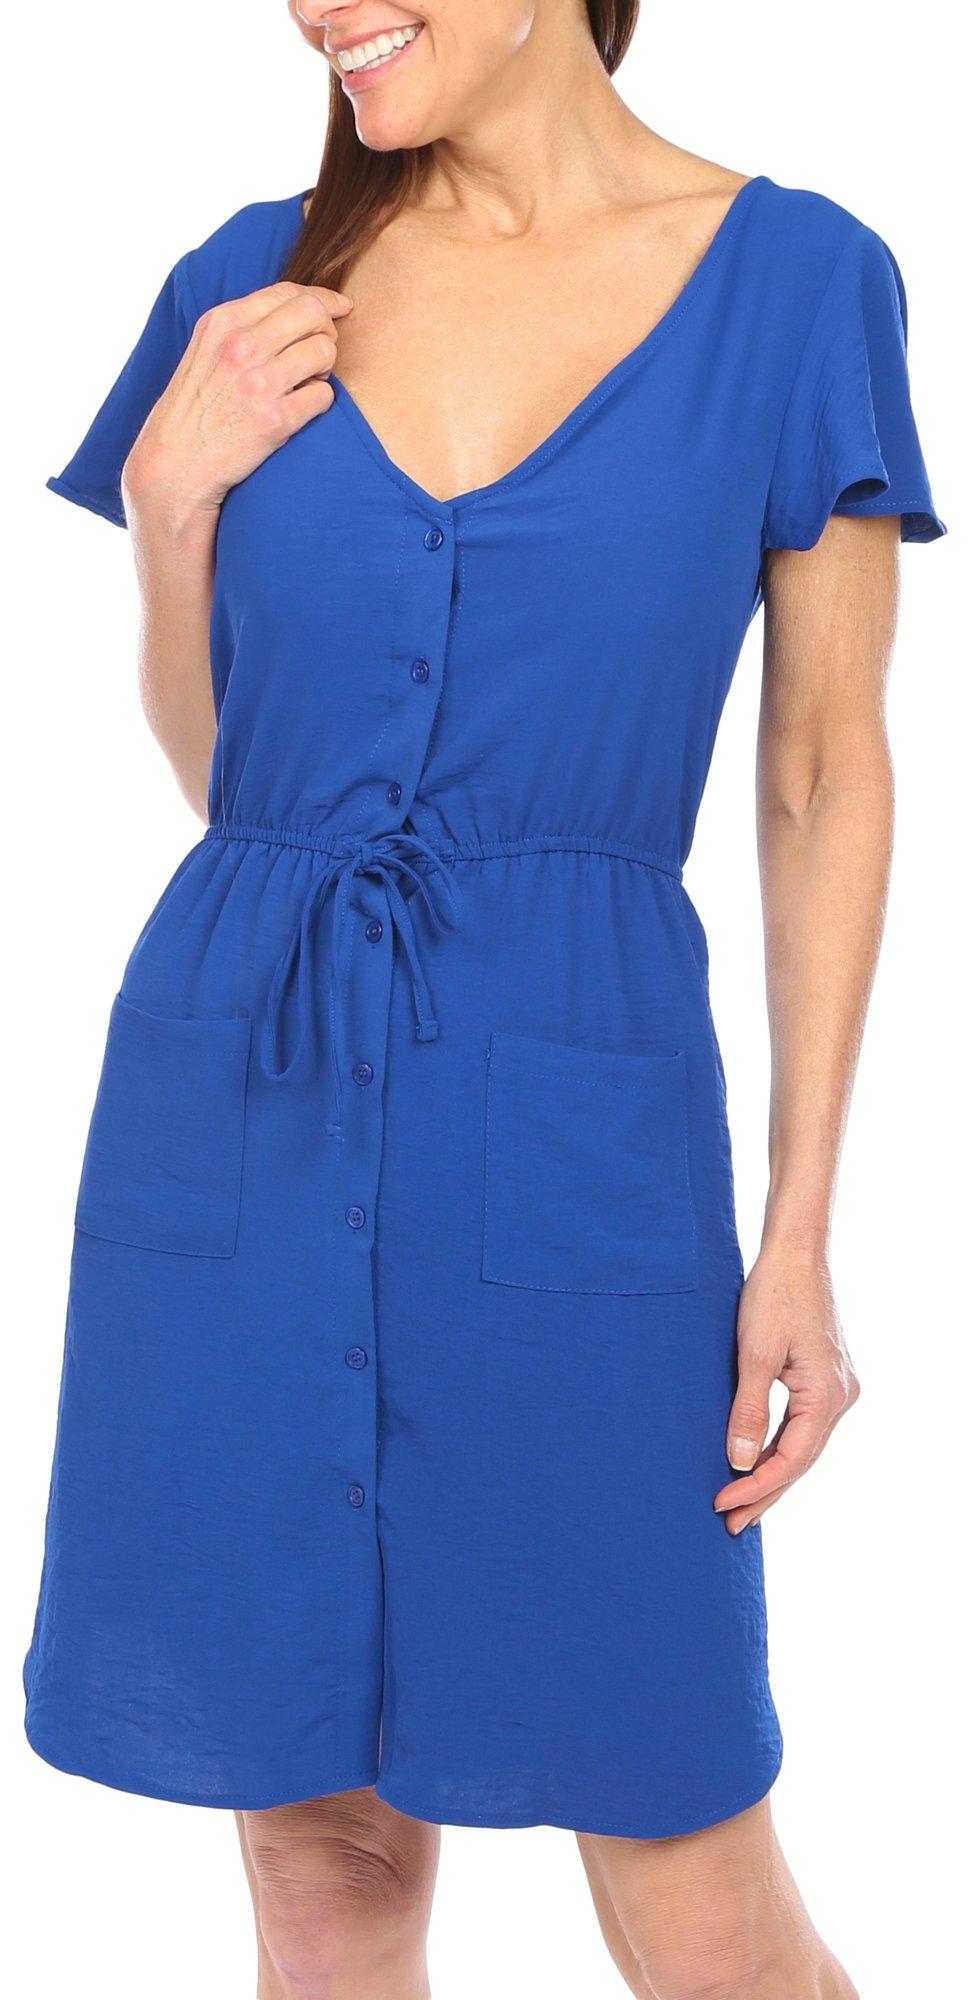 Lexington Avenue Womens Tie Short Sleeve Dress